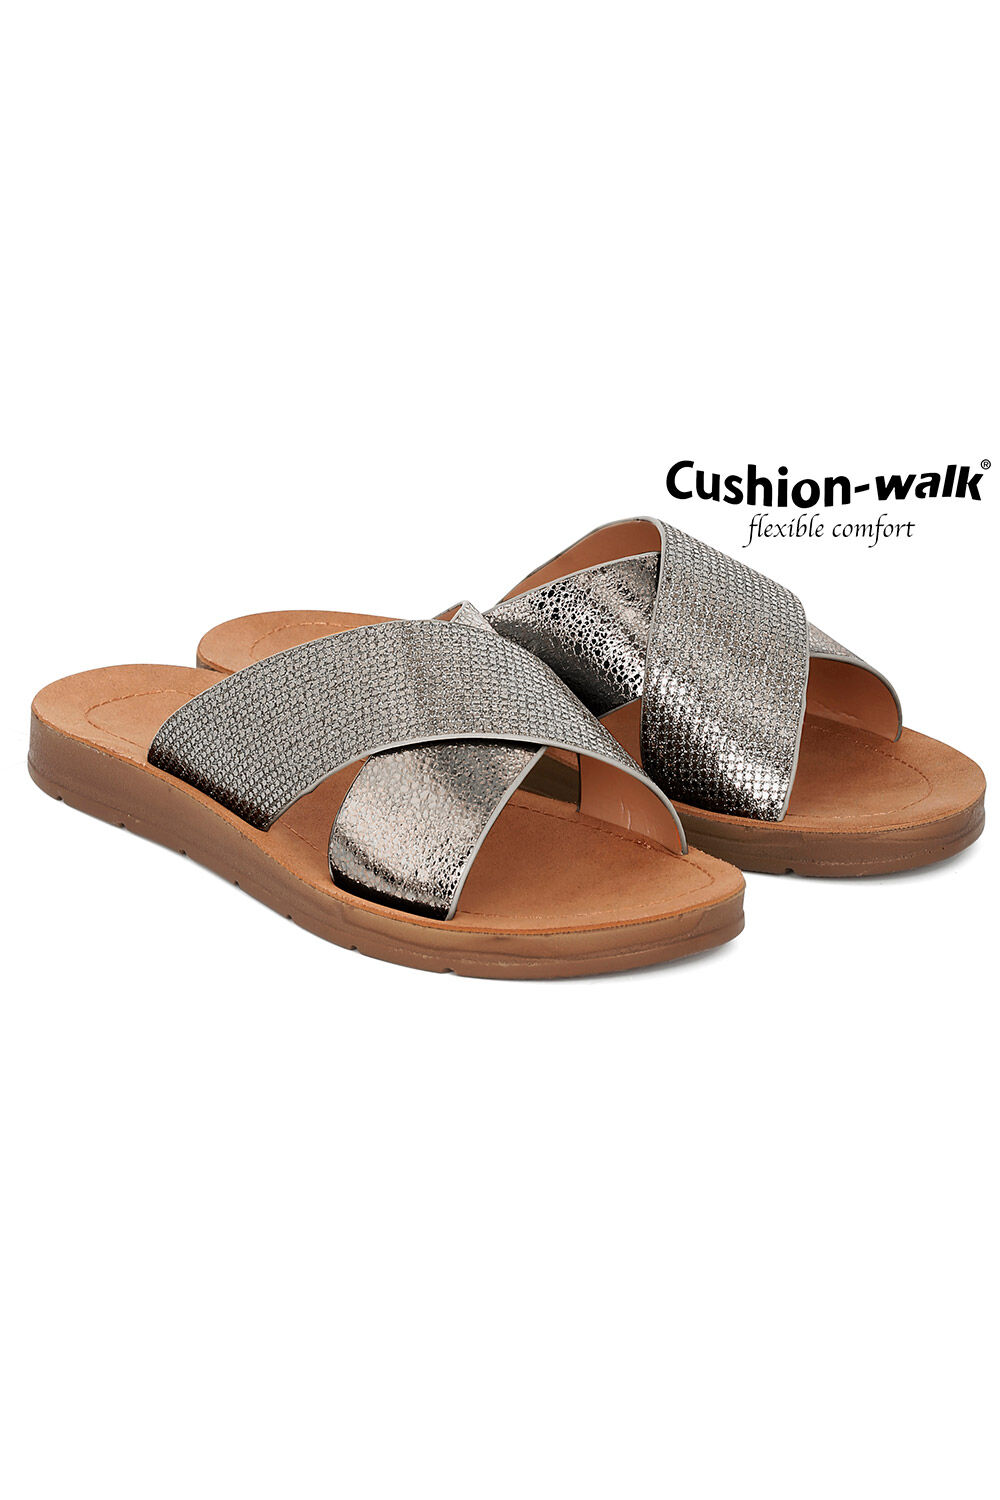 cushion walk mule sandals